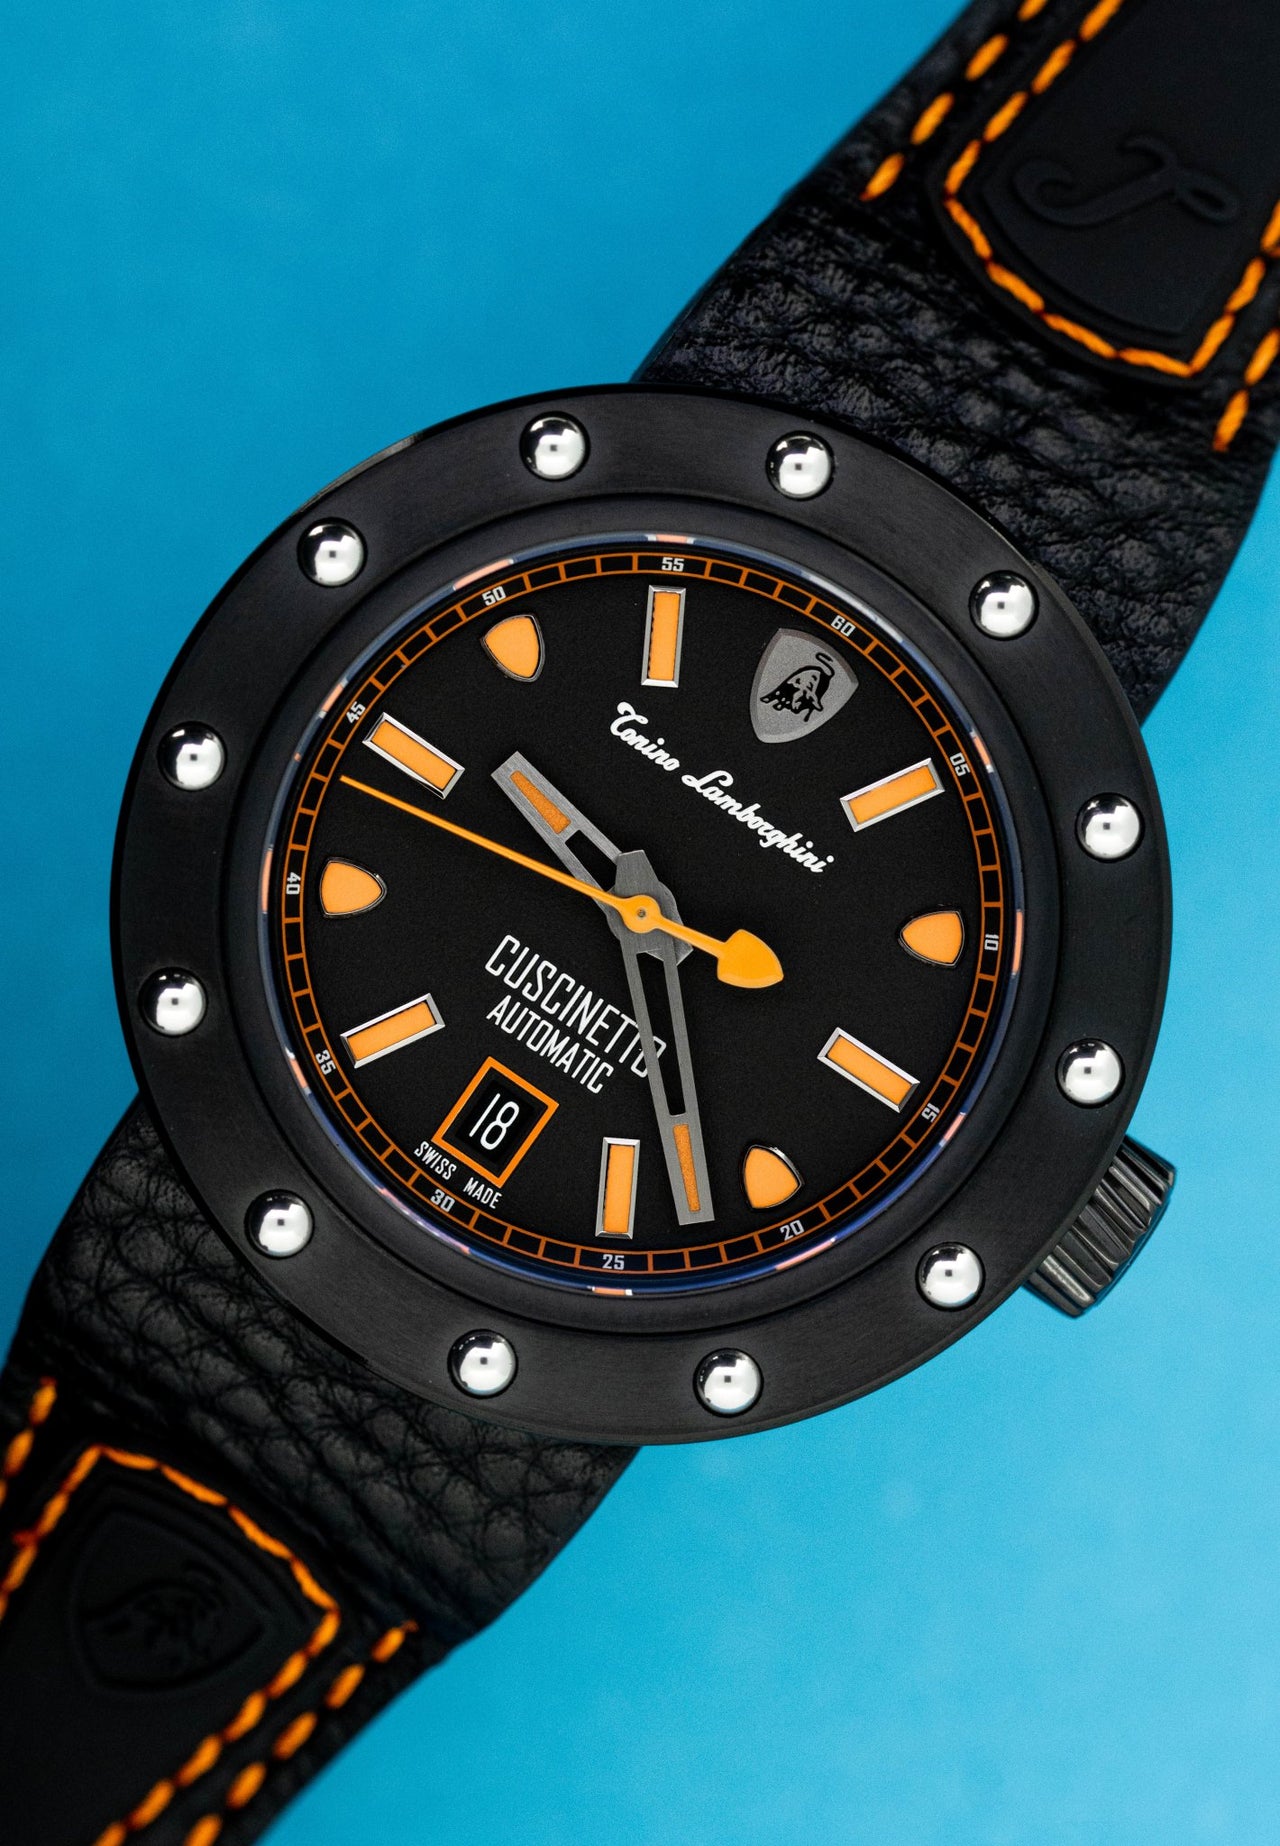 Tonino Lamborghini Cuscinetto Date Orange - Watches & Crystals